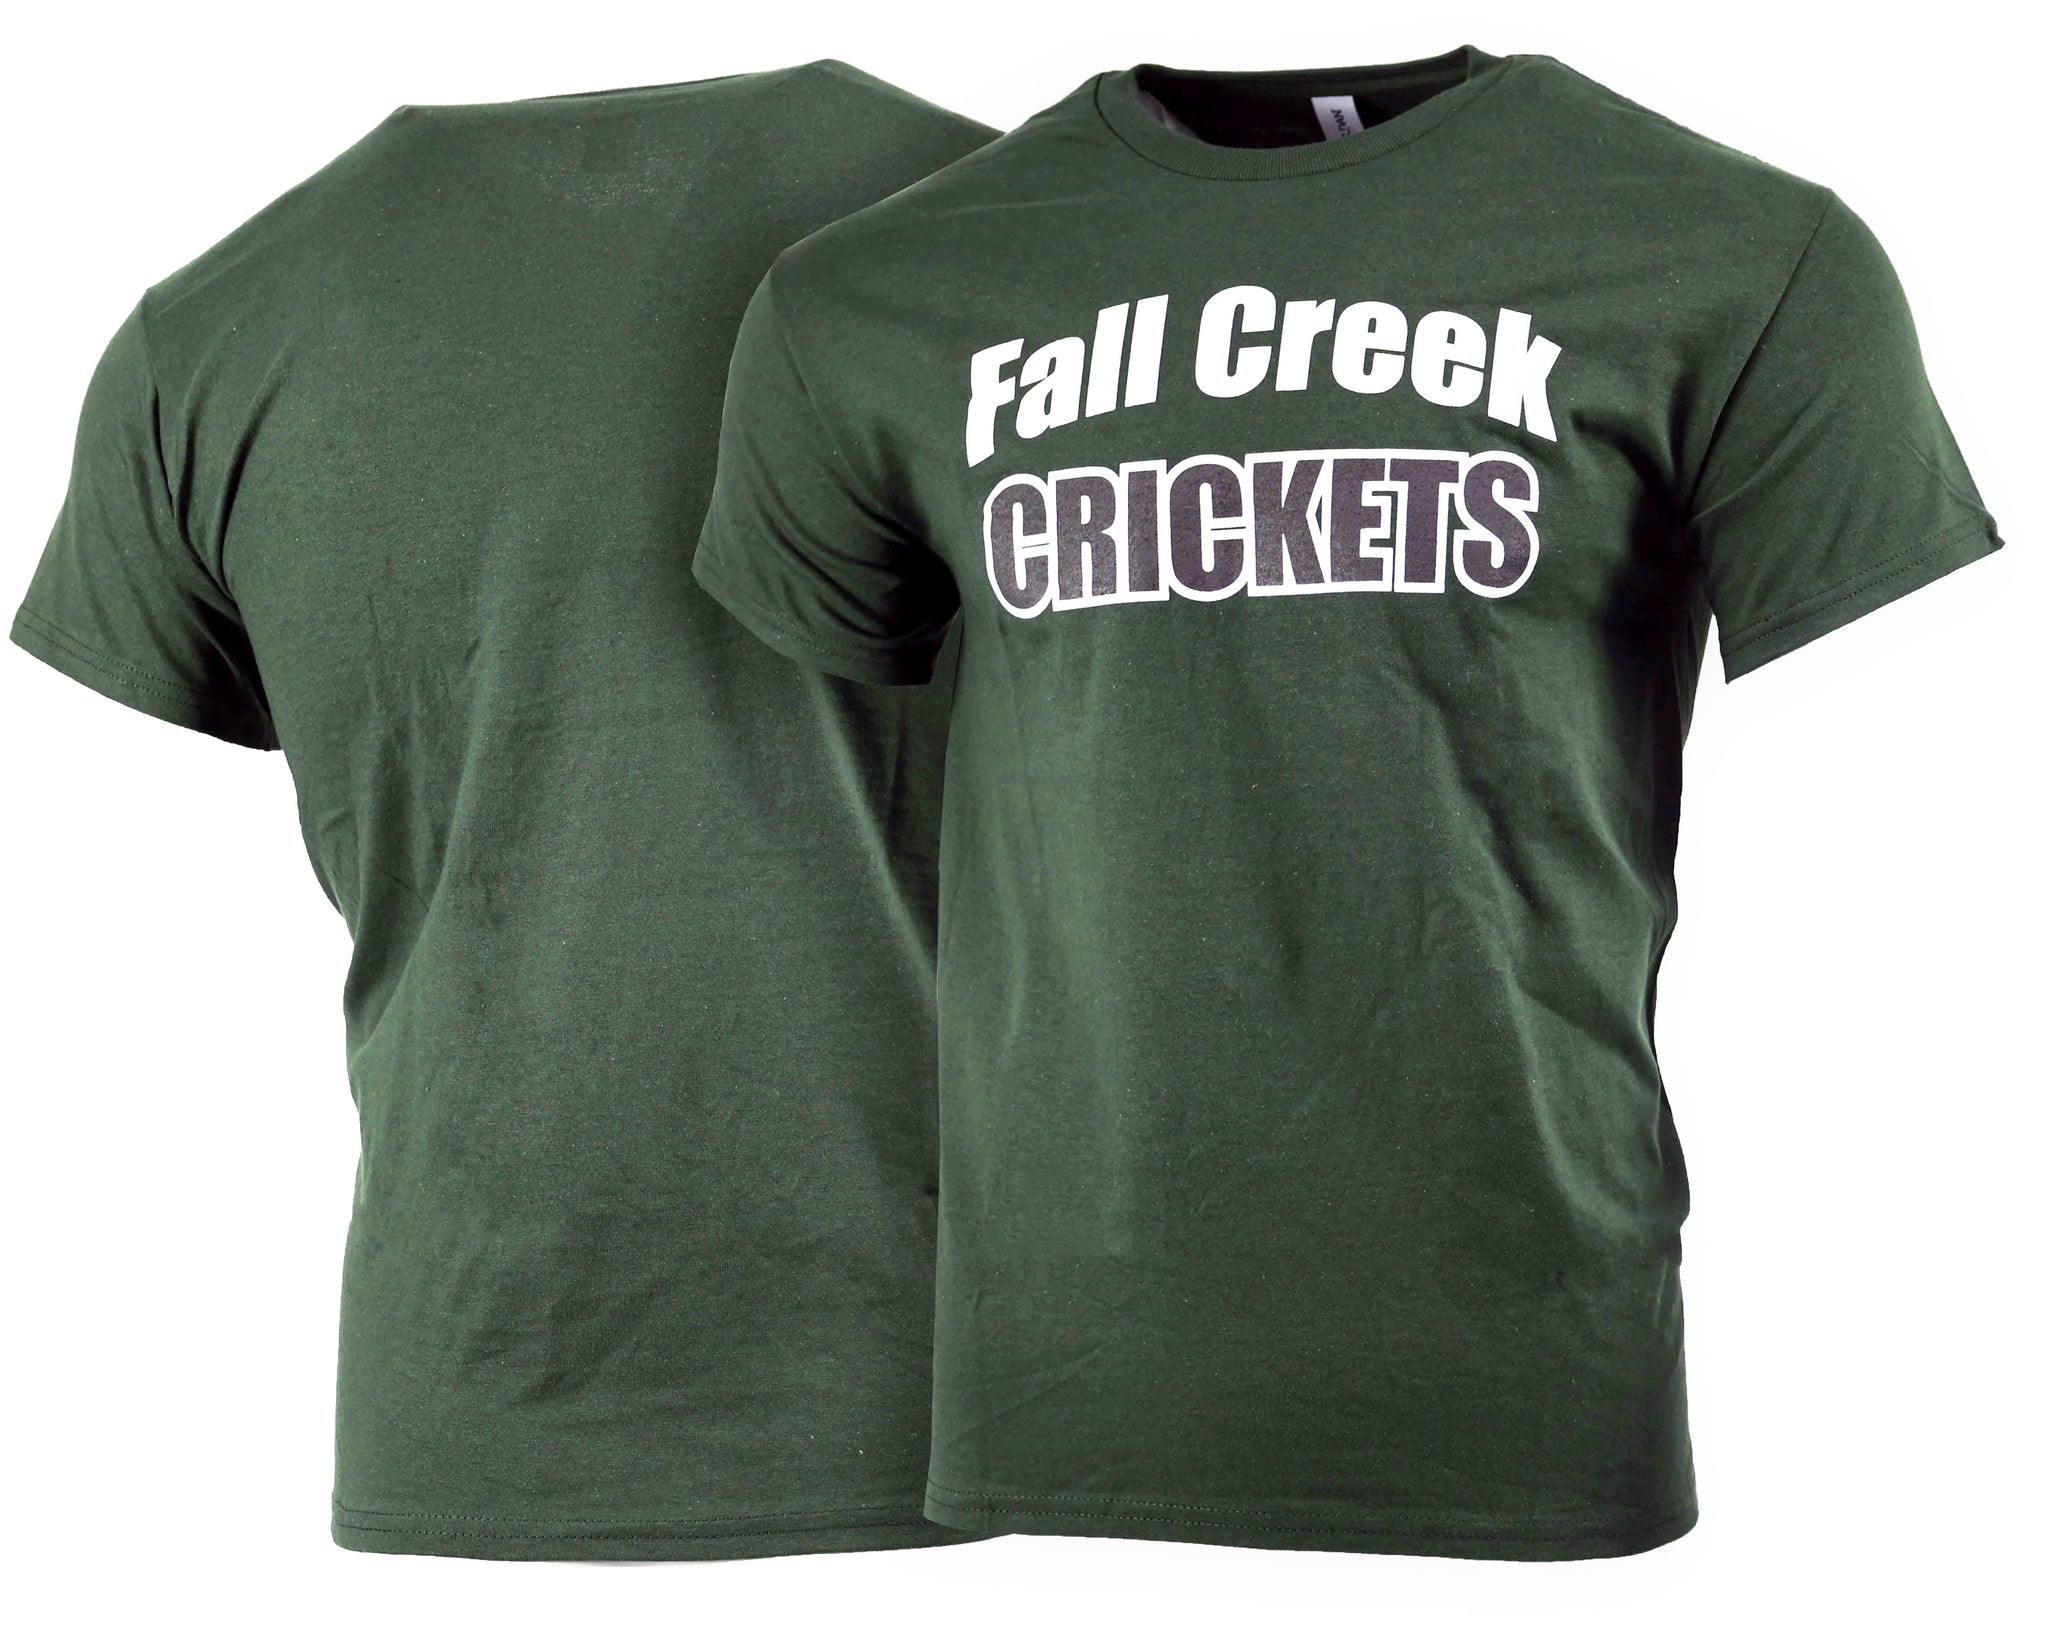 Men's Gildan Fall Creek Crickets Tee